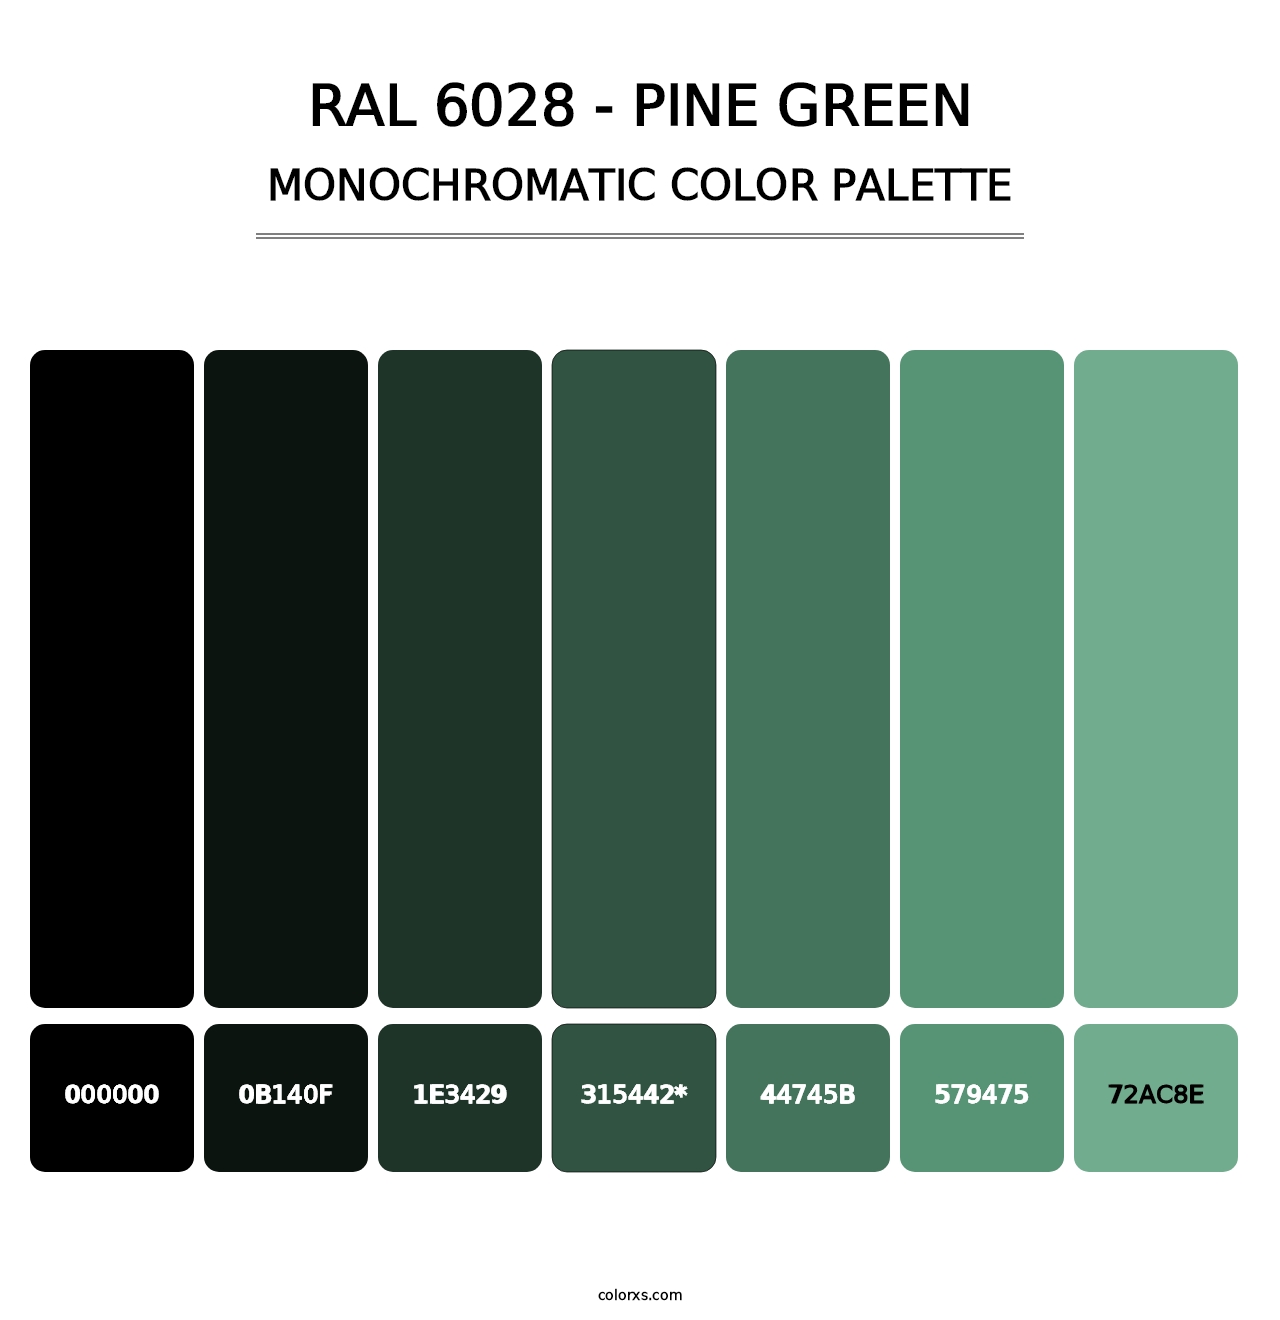 RAL 6028 - Pine Green - Monochromatic Color Palette